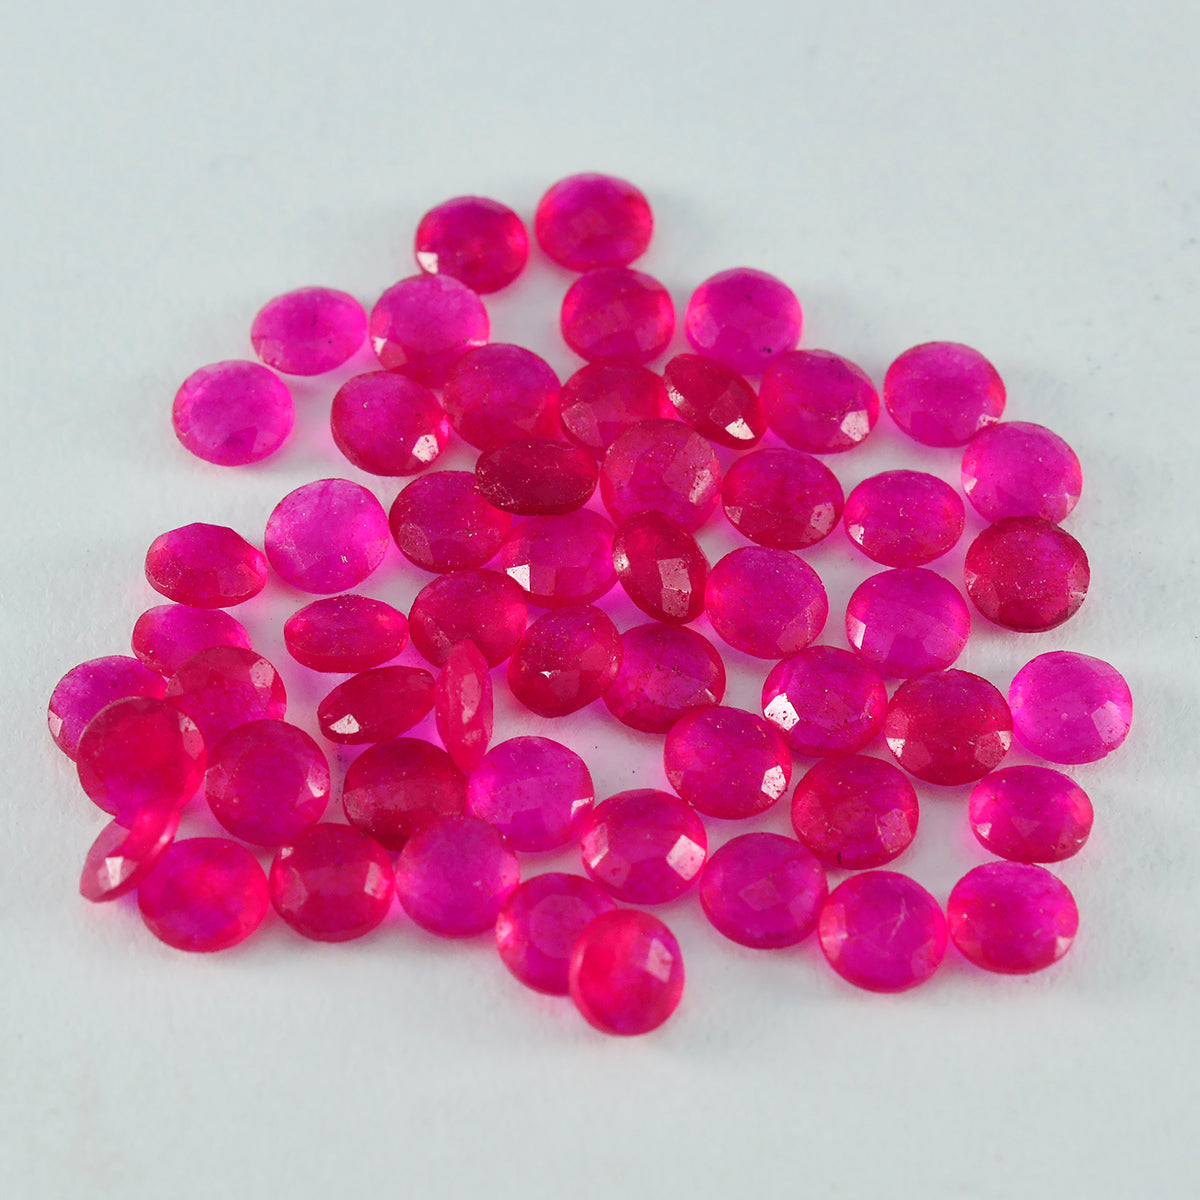 Riyogems 1PC echte rode jaspis gefacetteerd 3x3 mm ronde vorm prachtige kwaliteit losse edelsteen